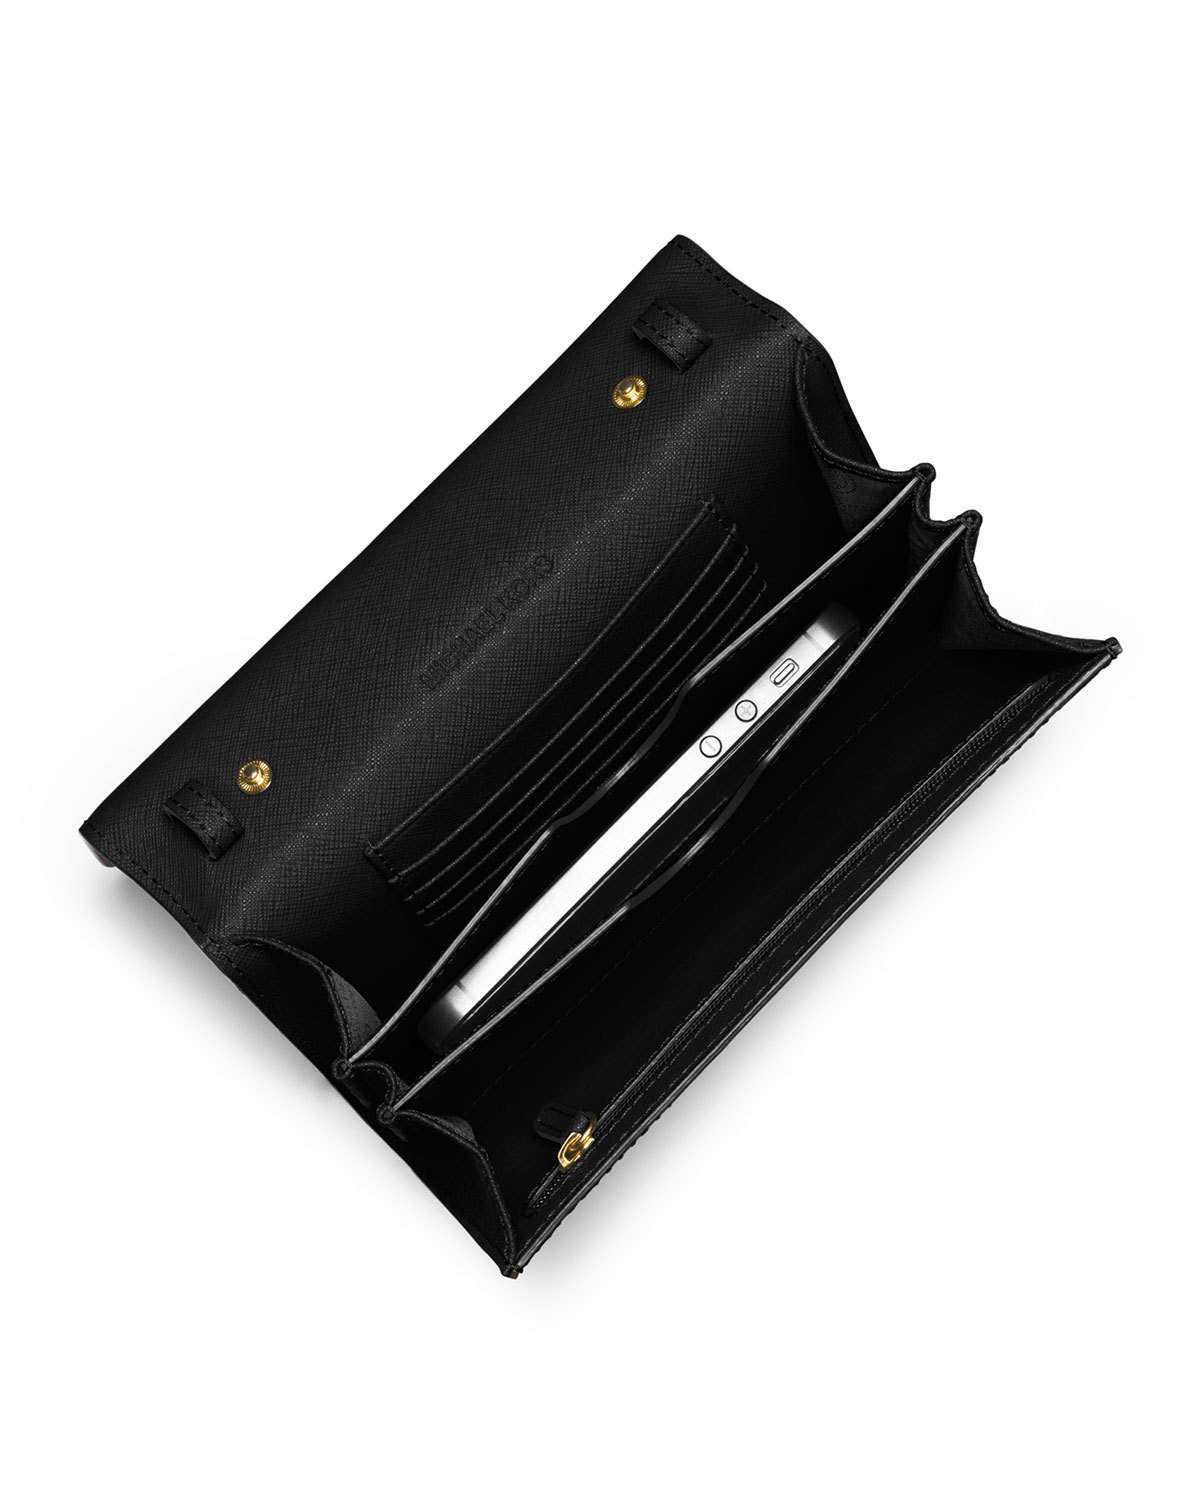 MICHAEL Michael Kors Leather Jet Set Travel Large Phone Crossbody Bag in Black/Gold (Black) - Lyst